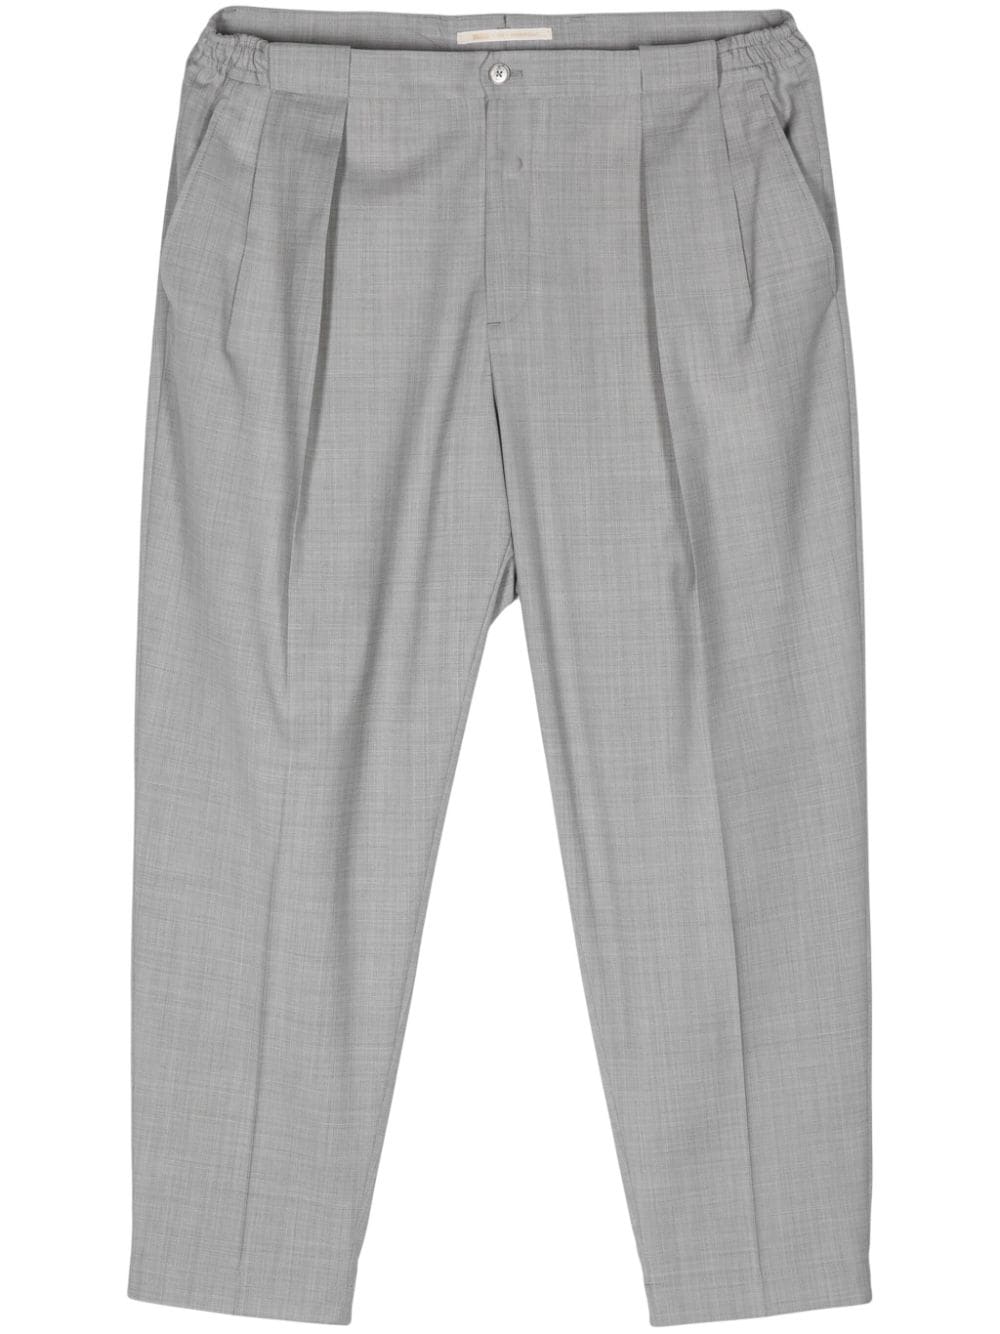 Pantalone Portobello grigio